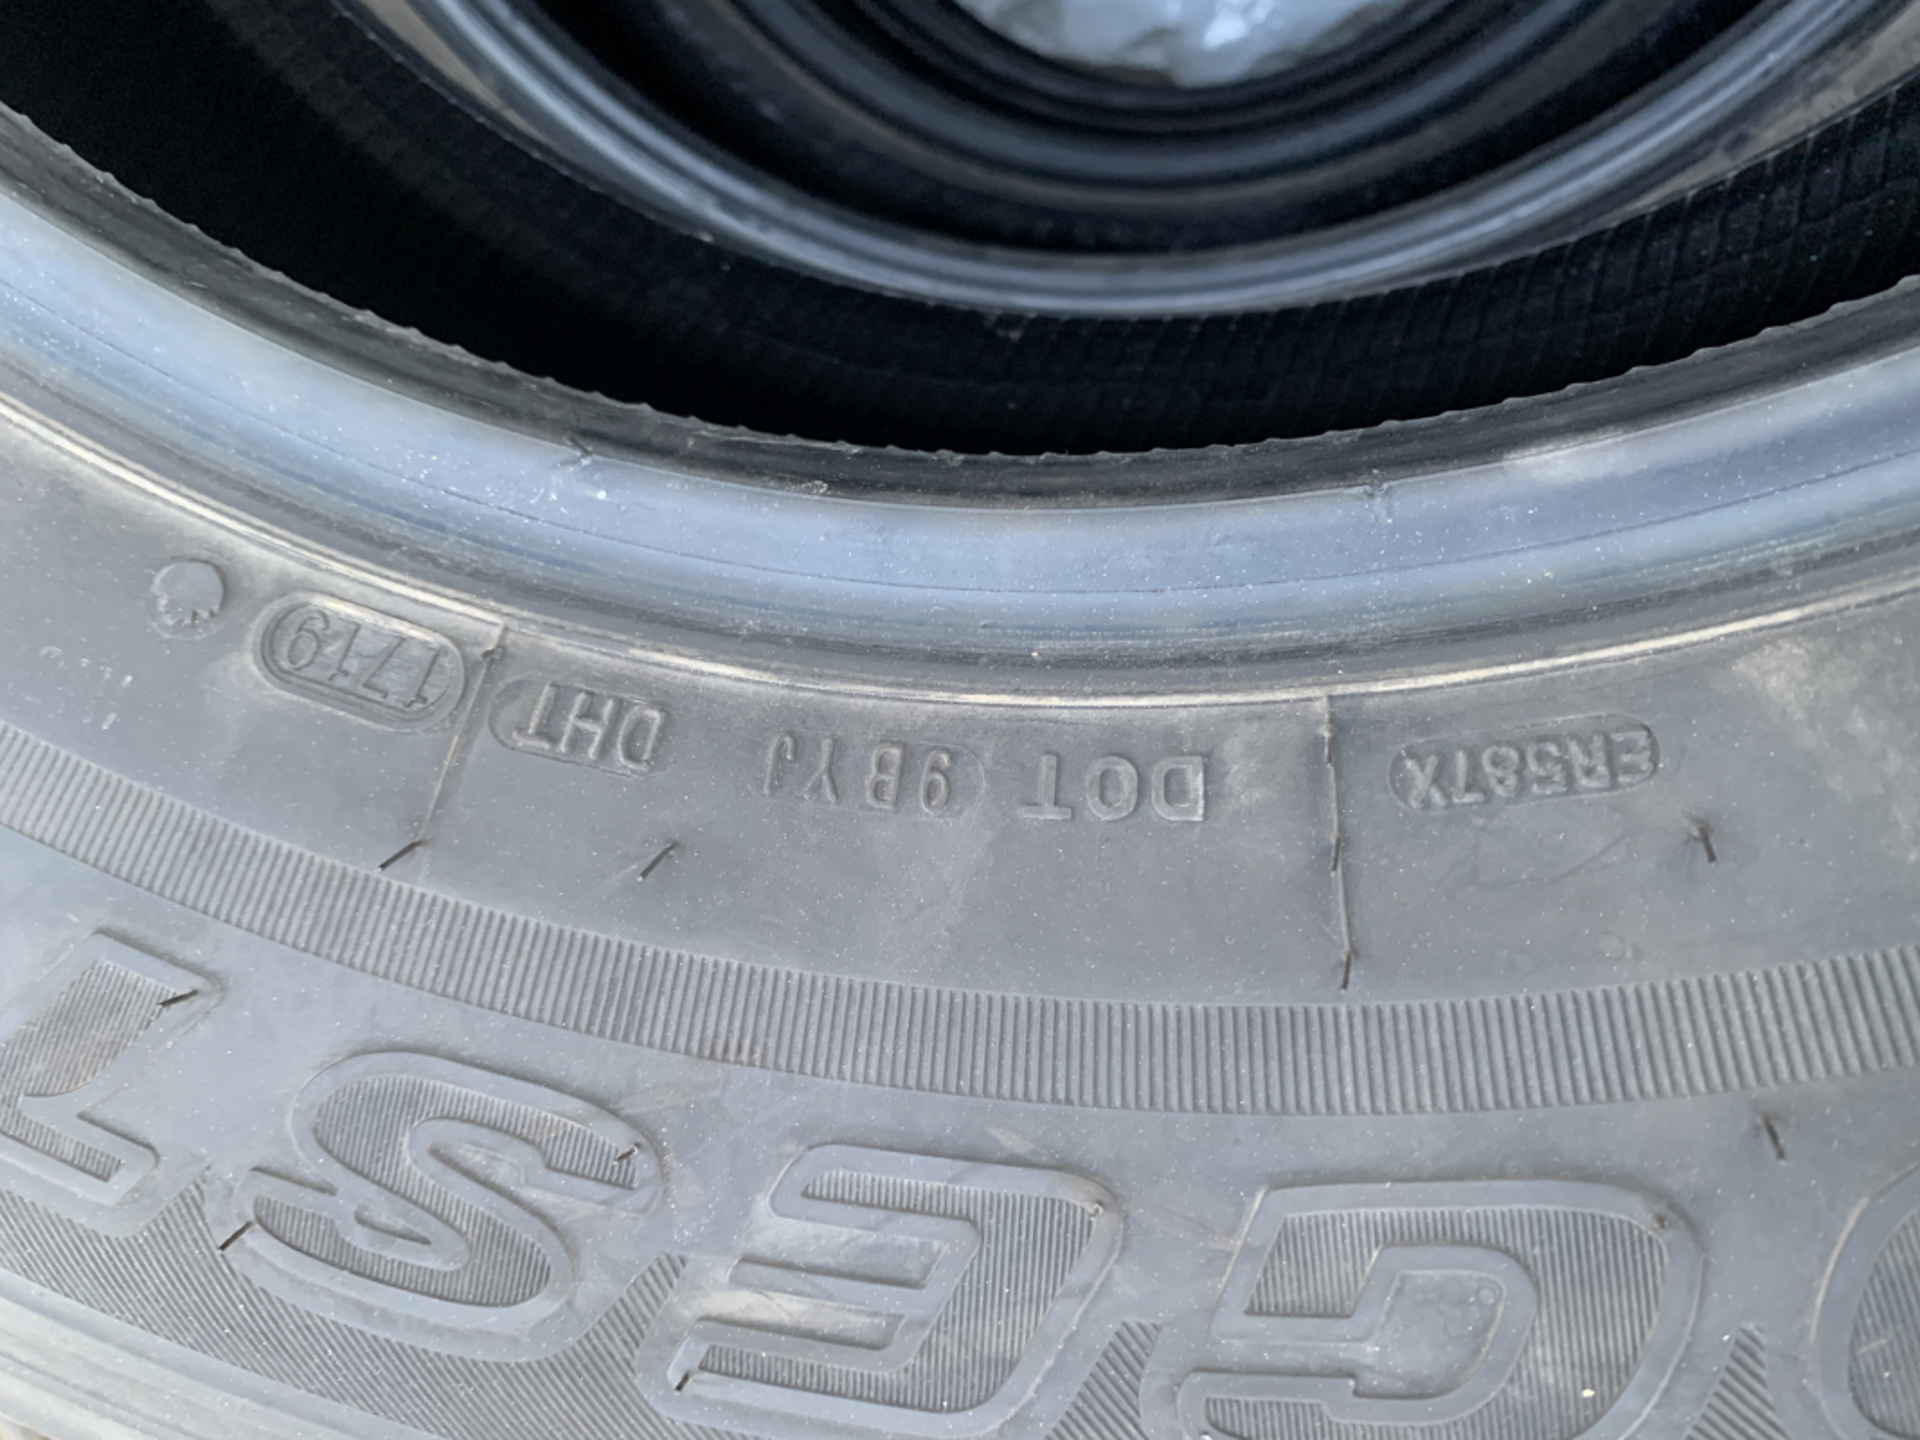 Bridgestone - Dueler H/T All Season Tires - Size 275/65/R18 - Image 5 of 5